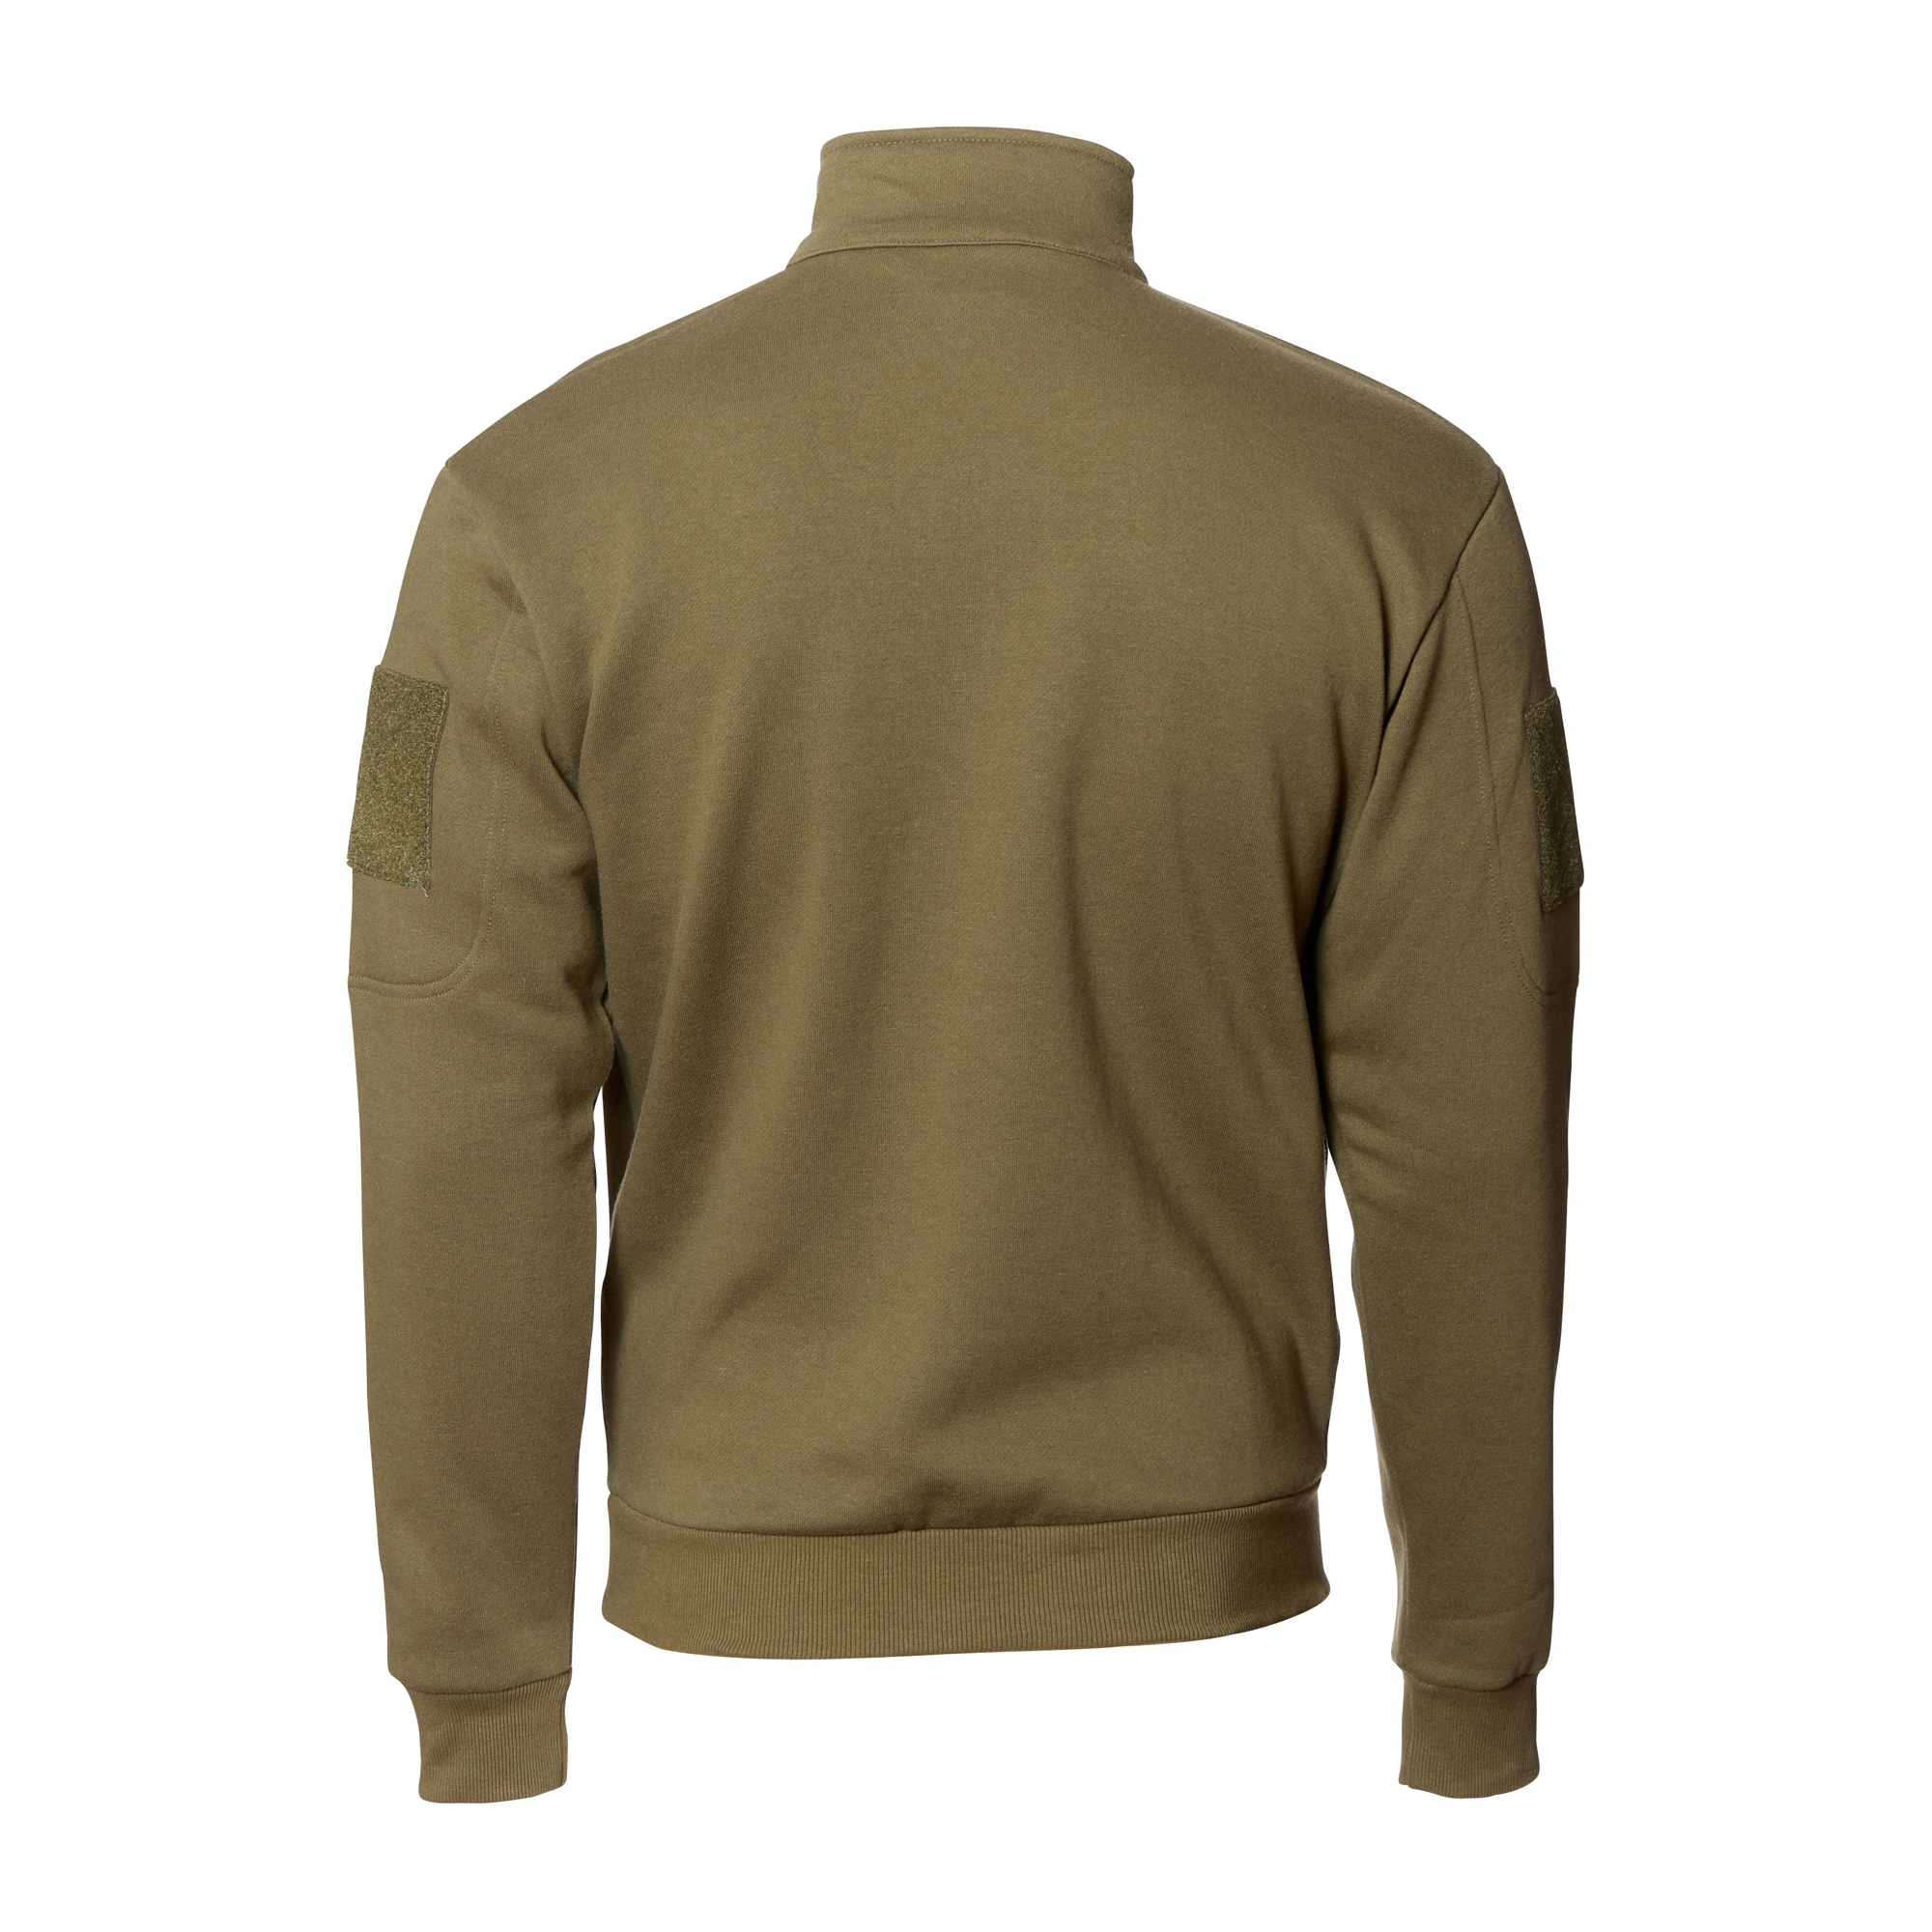 Mil-Tec Tactical Sweatshirt with Zipper ranger green by ASMC